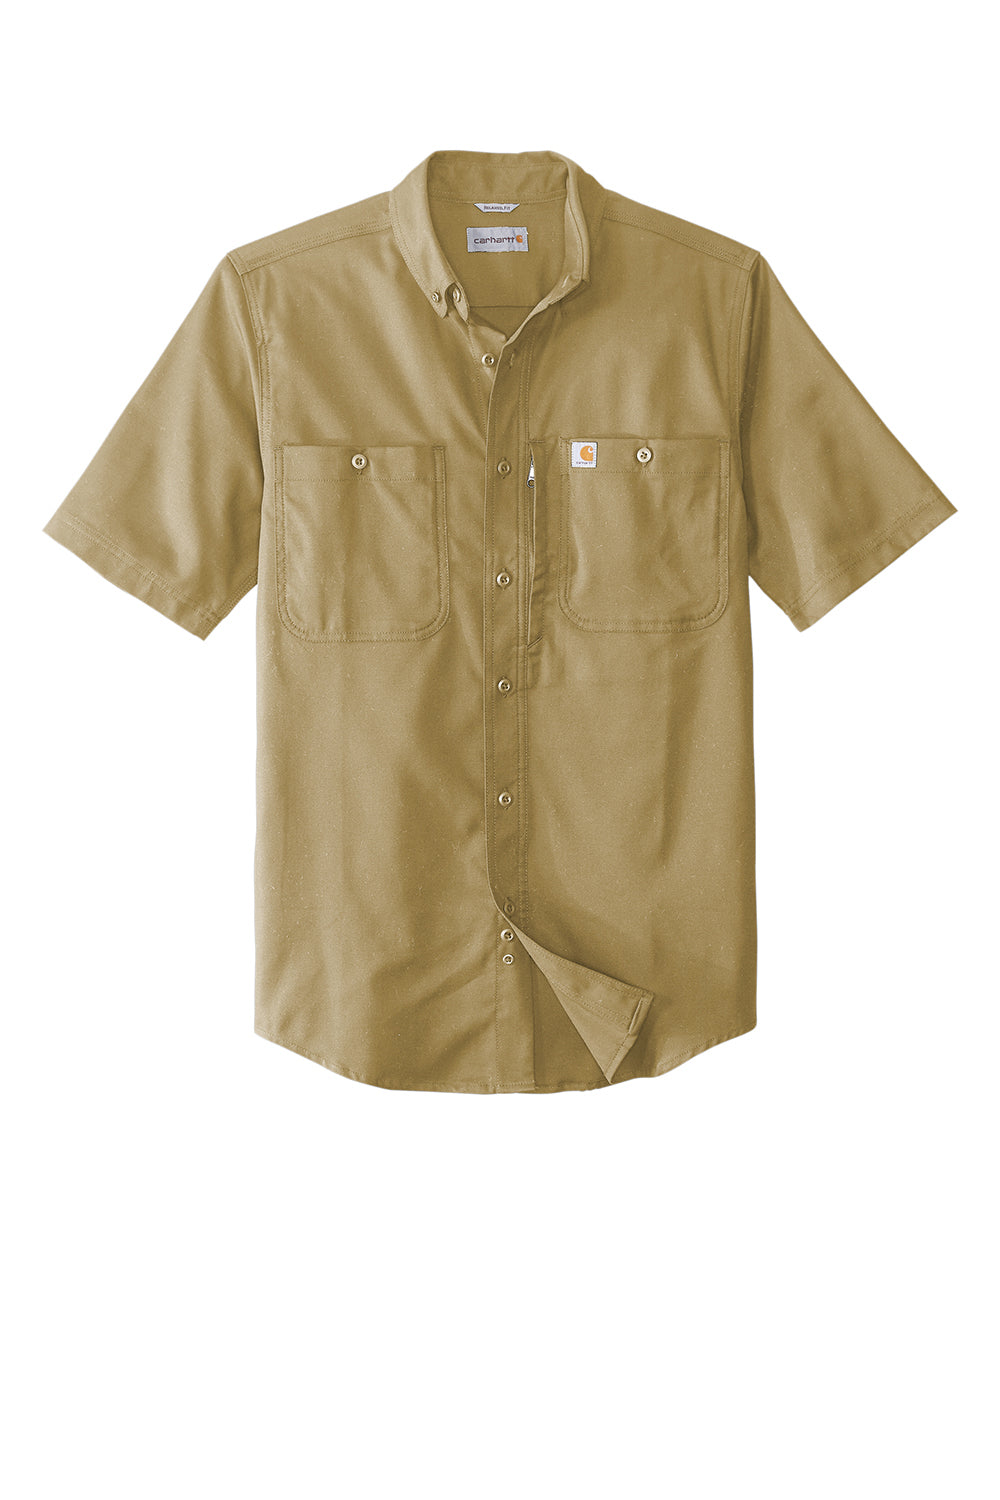 Carhartt CT102537 Mens Rugged Professional Series Wrinkle Resistant Short Sleeve Button Down Shirt w/ Pocket Dark Khaki Brown Flat Front